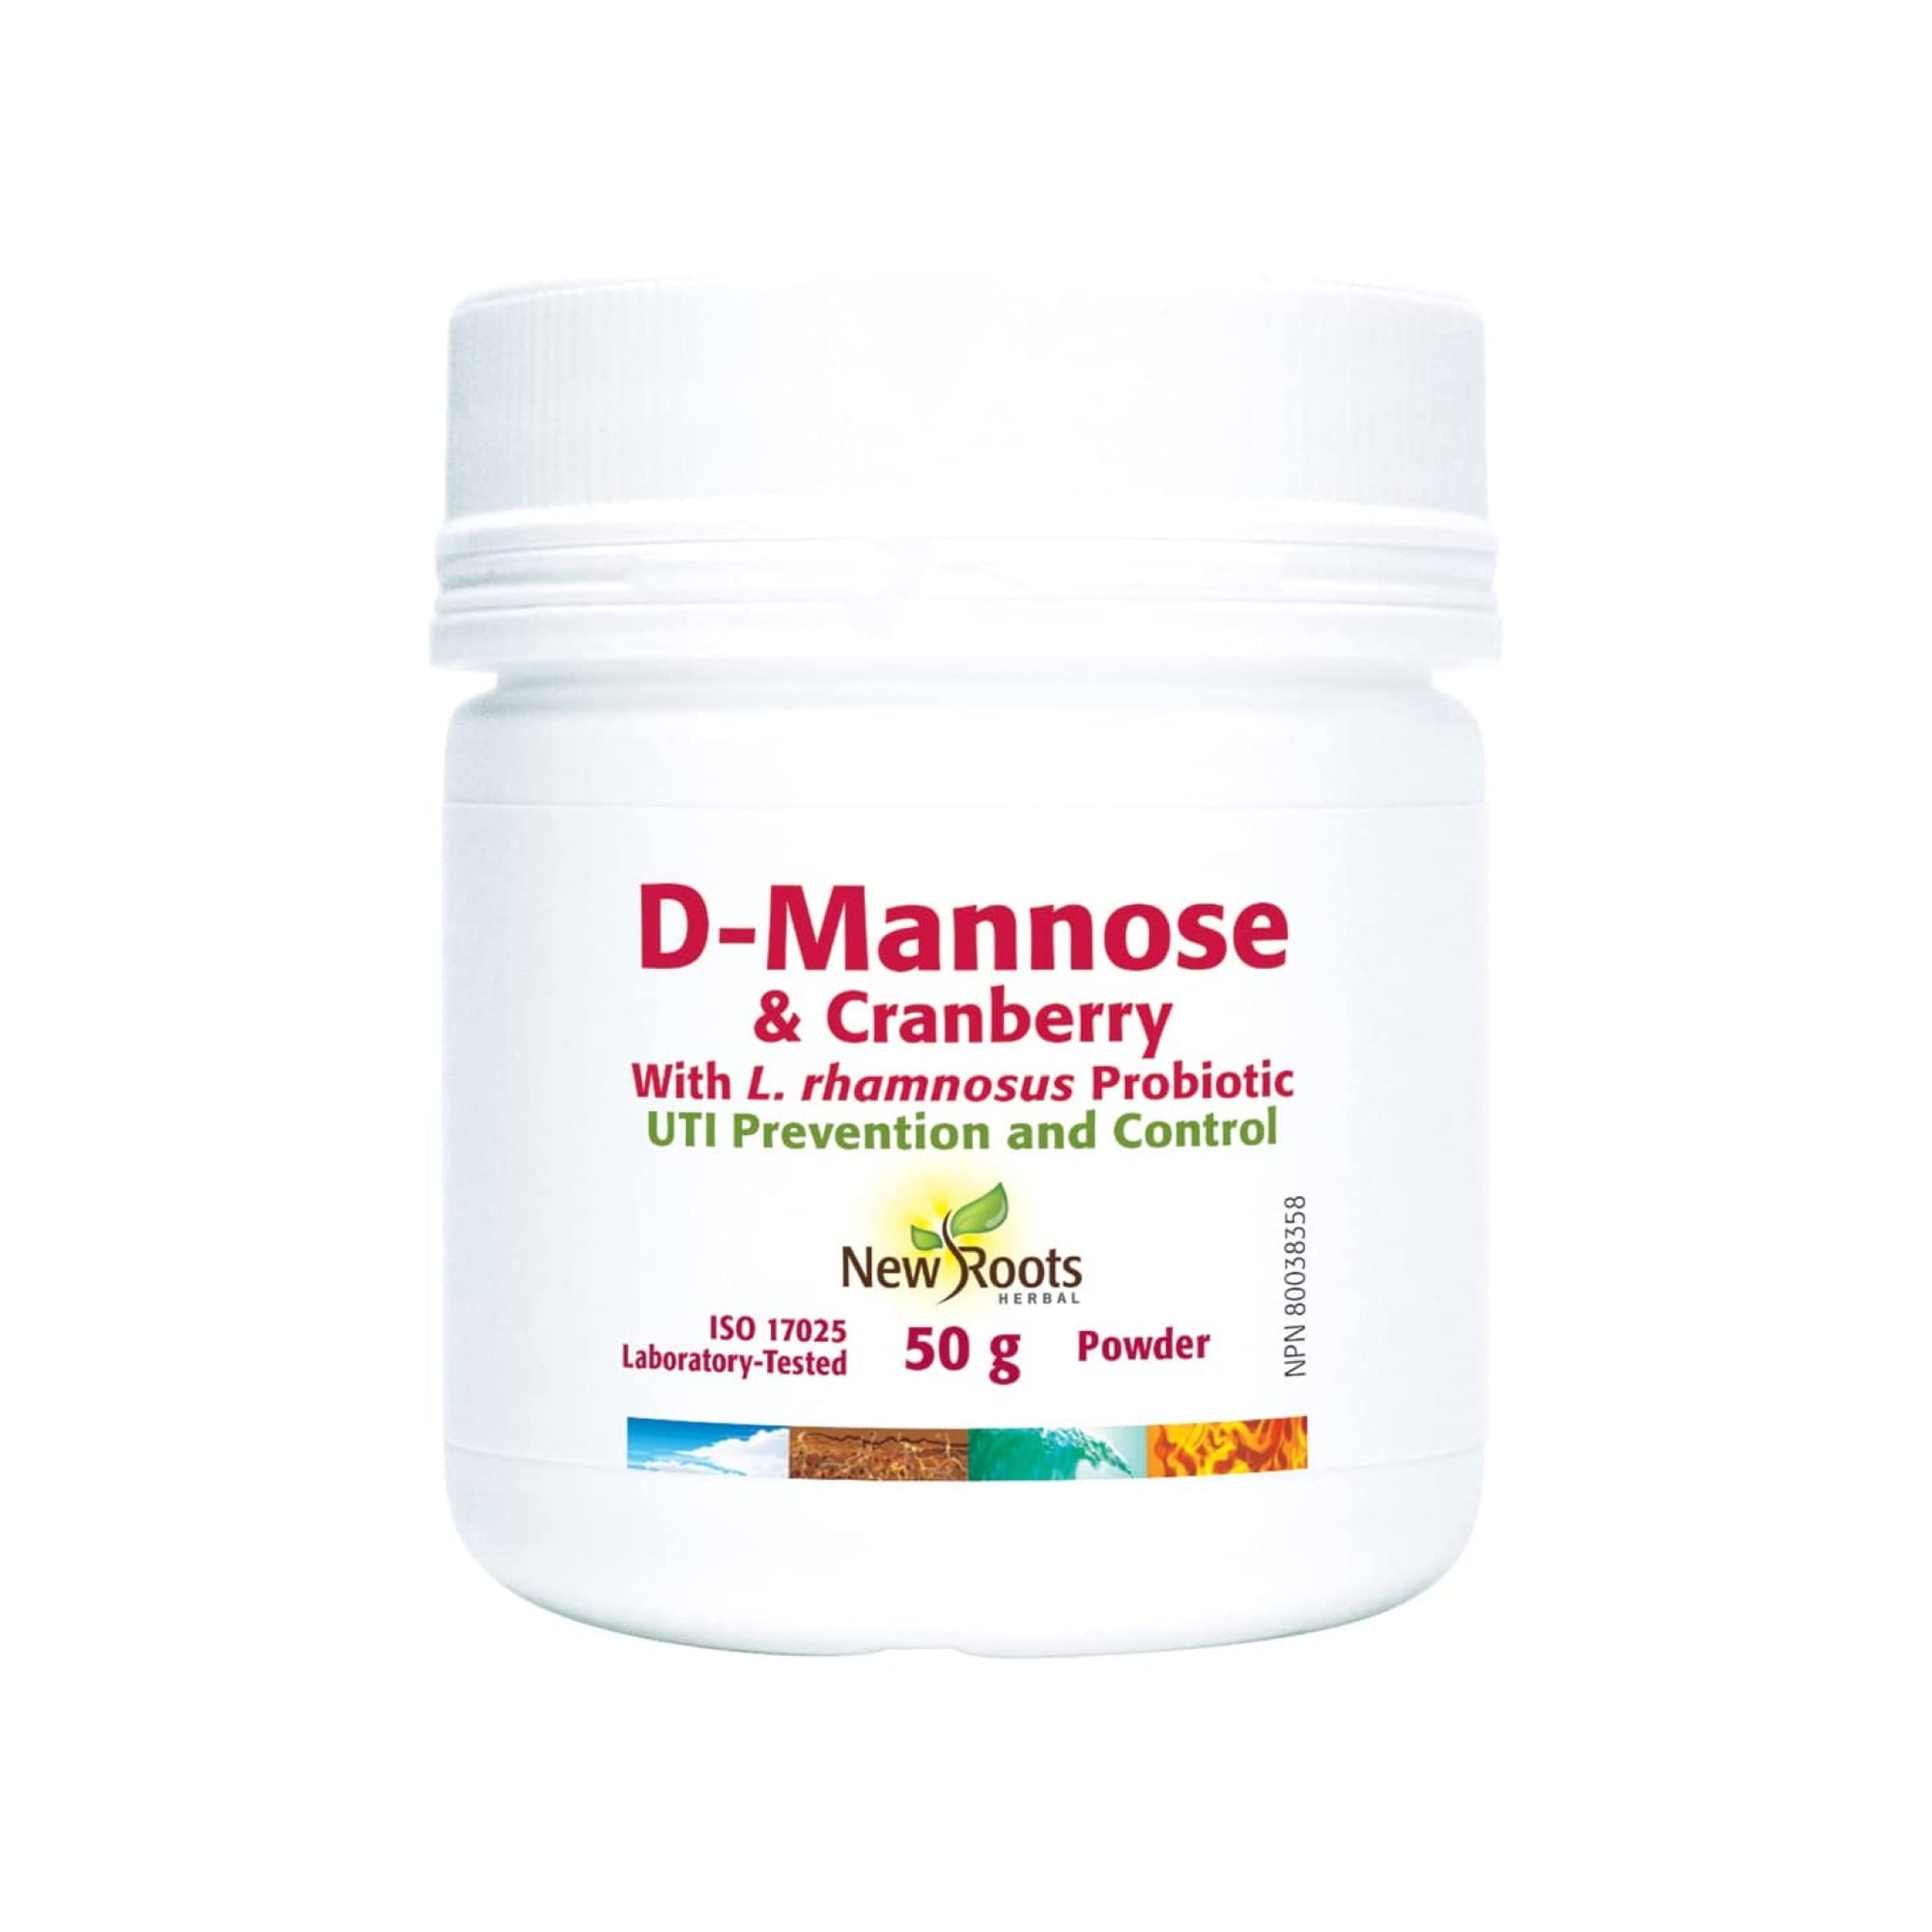 New Roots D-Mannose & Cranberry with Probiotics Powder 50g